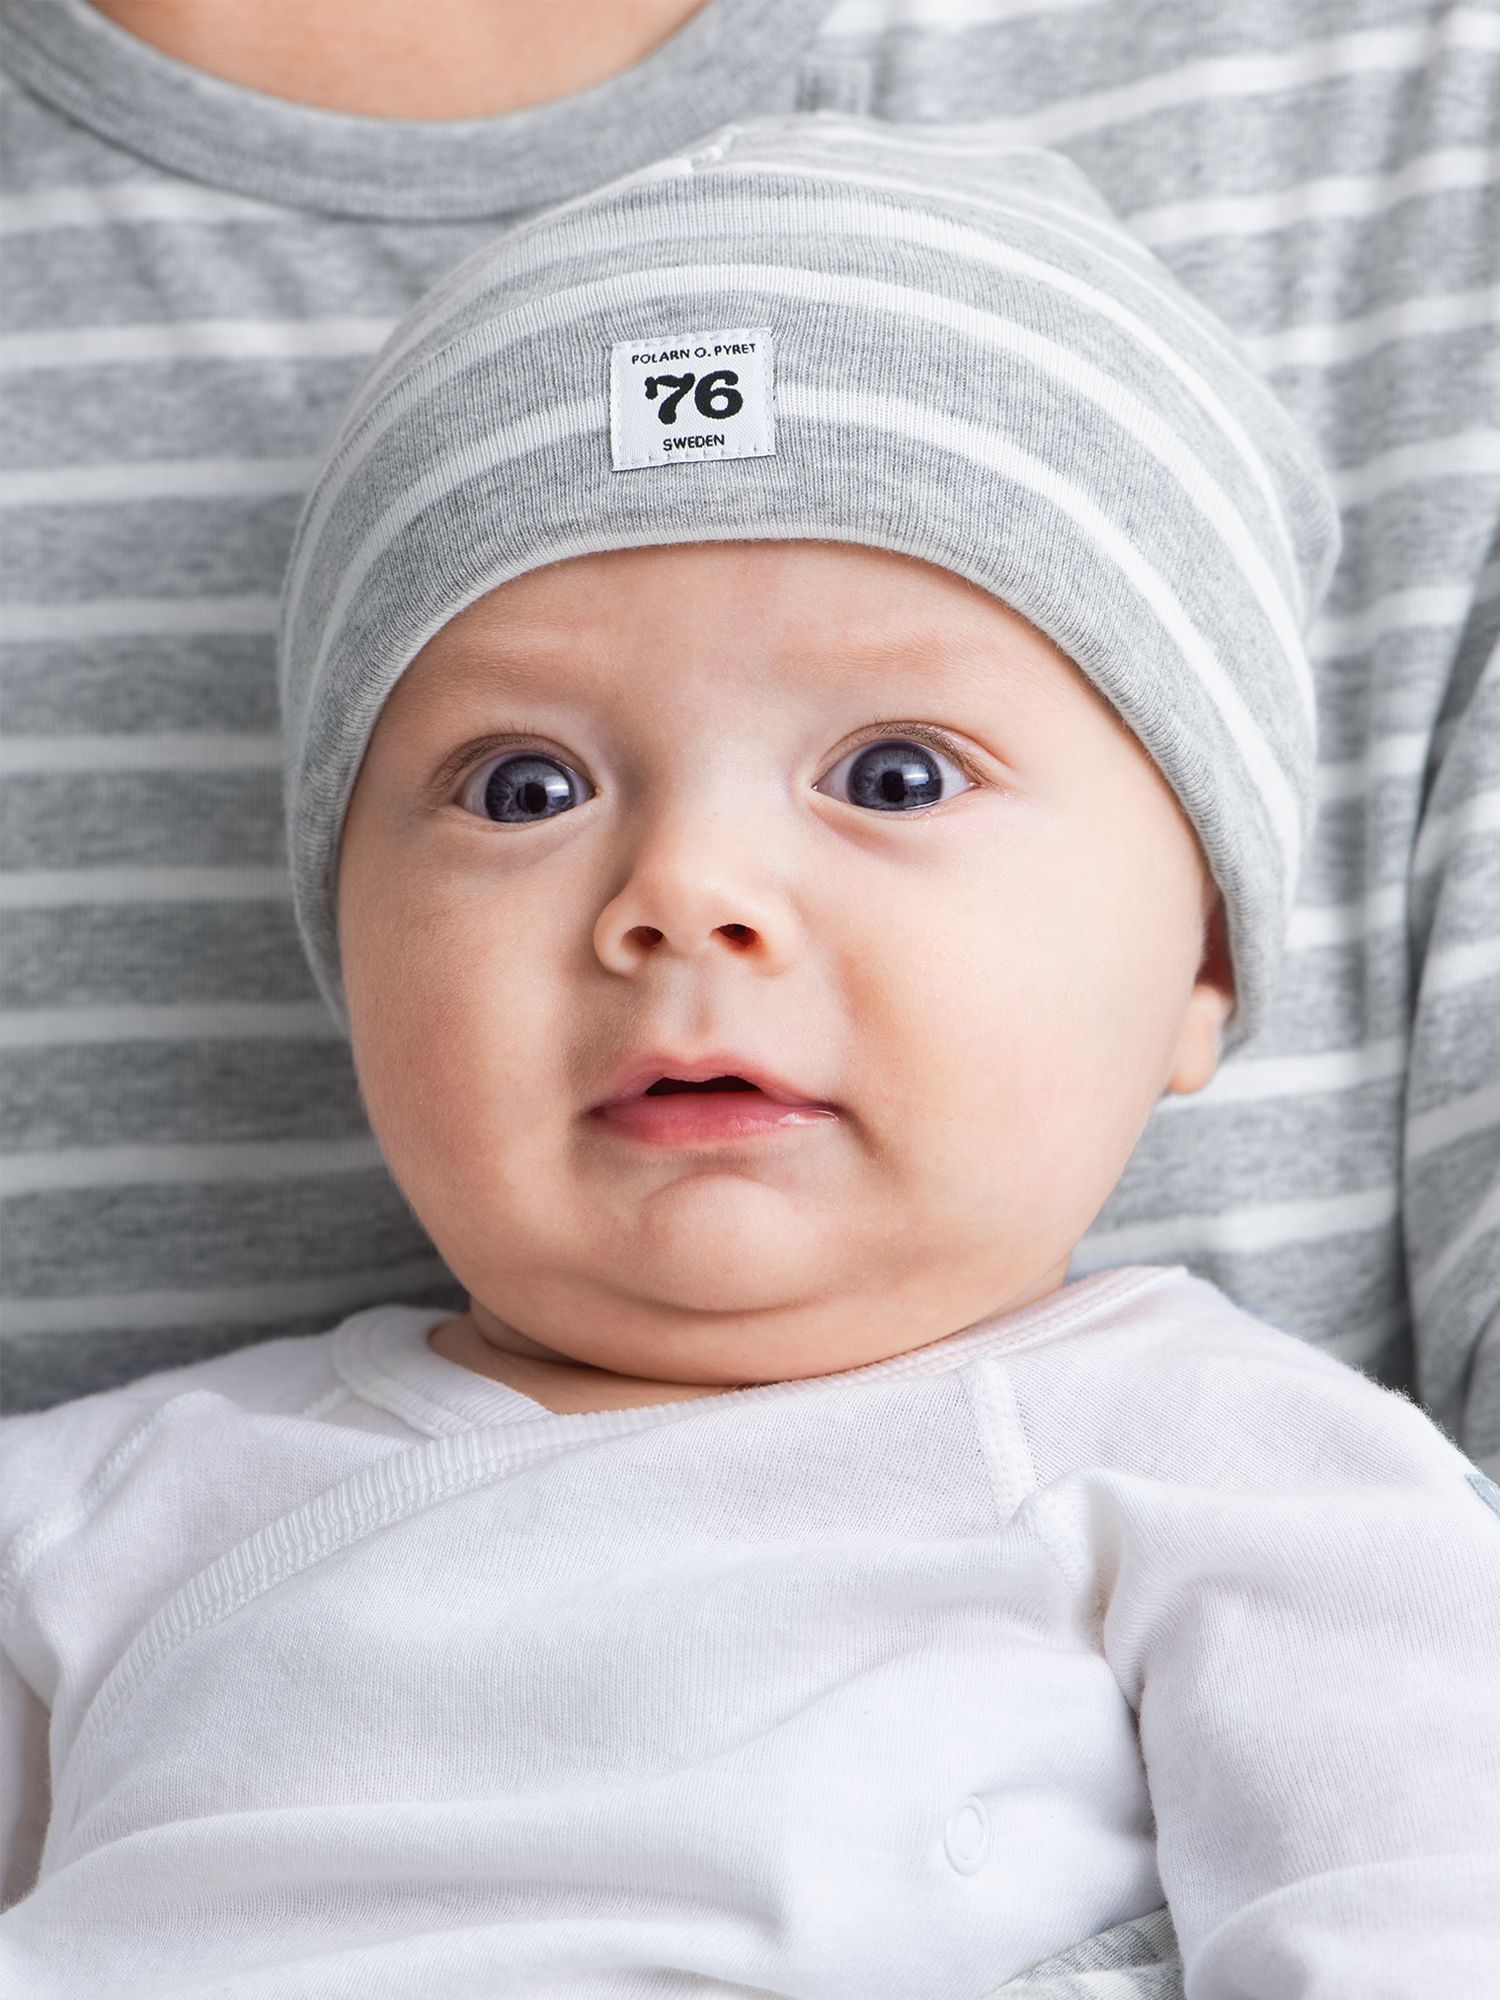 Polarn O. Pyret Baby Organic Cotton Striped Hat, Grey, Earl years